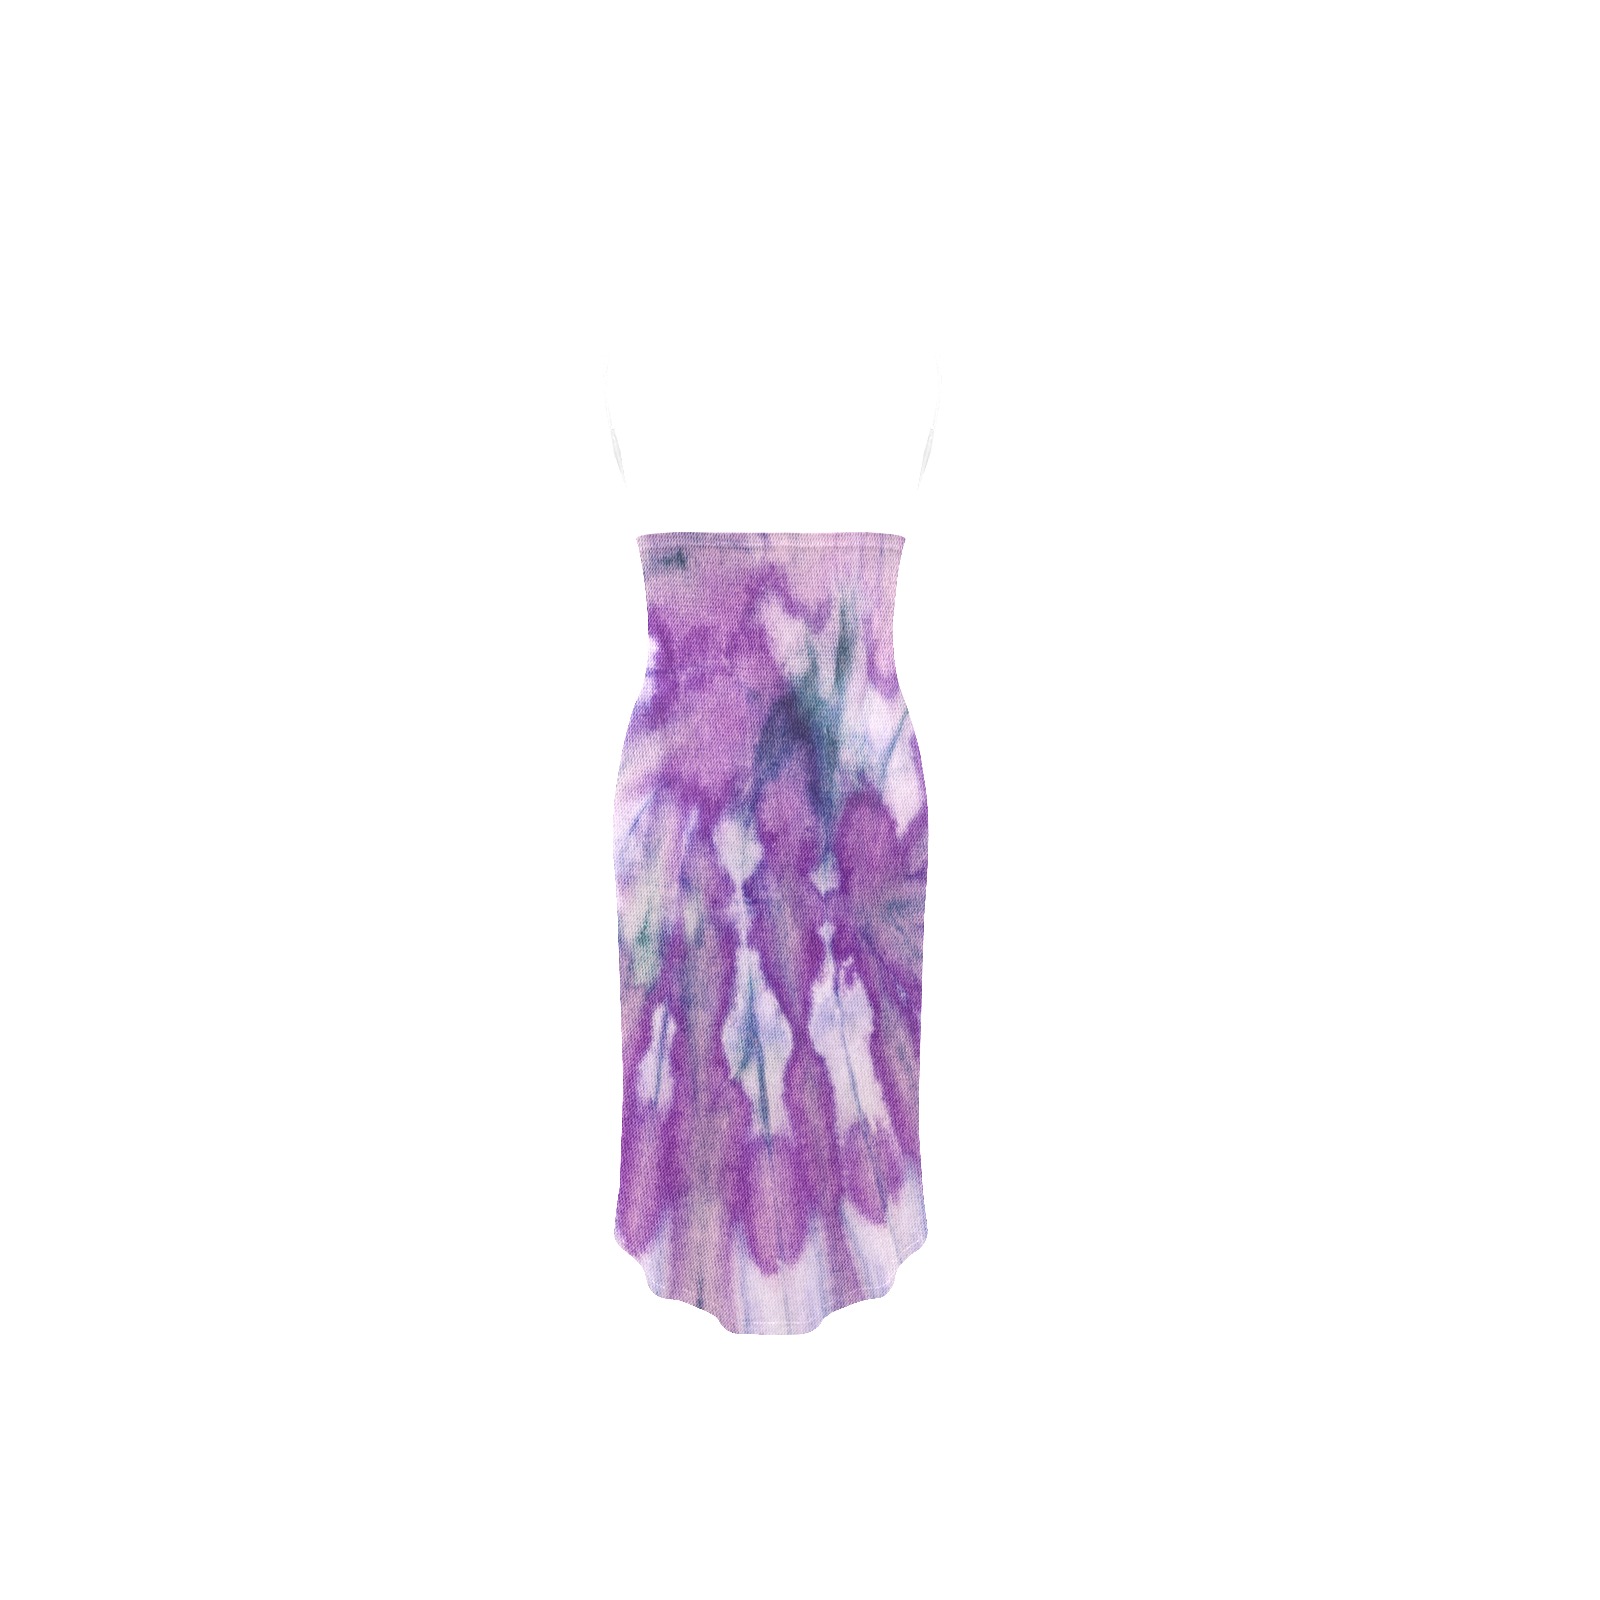 Purple Tie Dye Spaghetti Strap Backless Beach Cover Up Dress (Model D65)